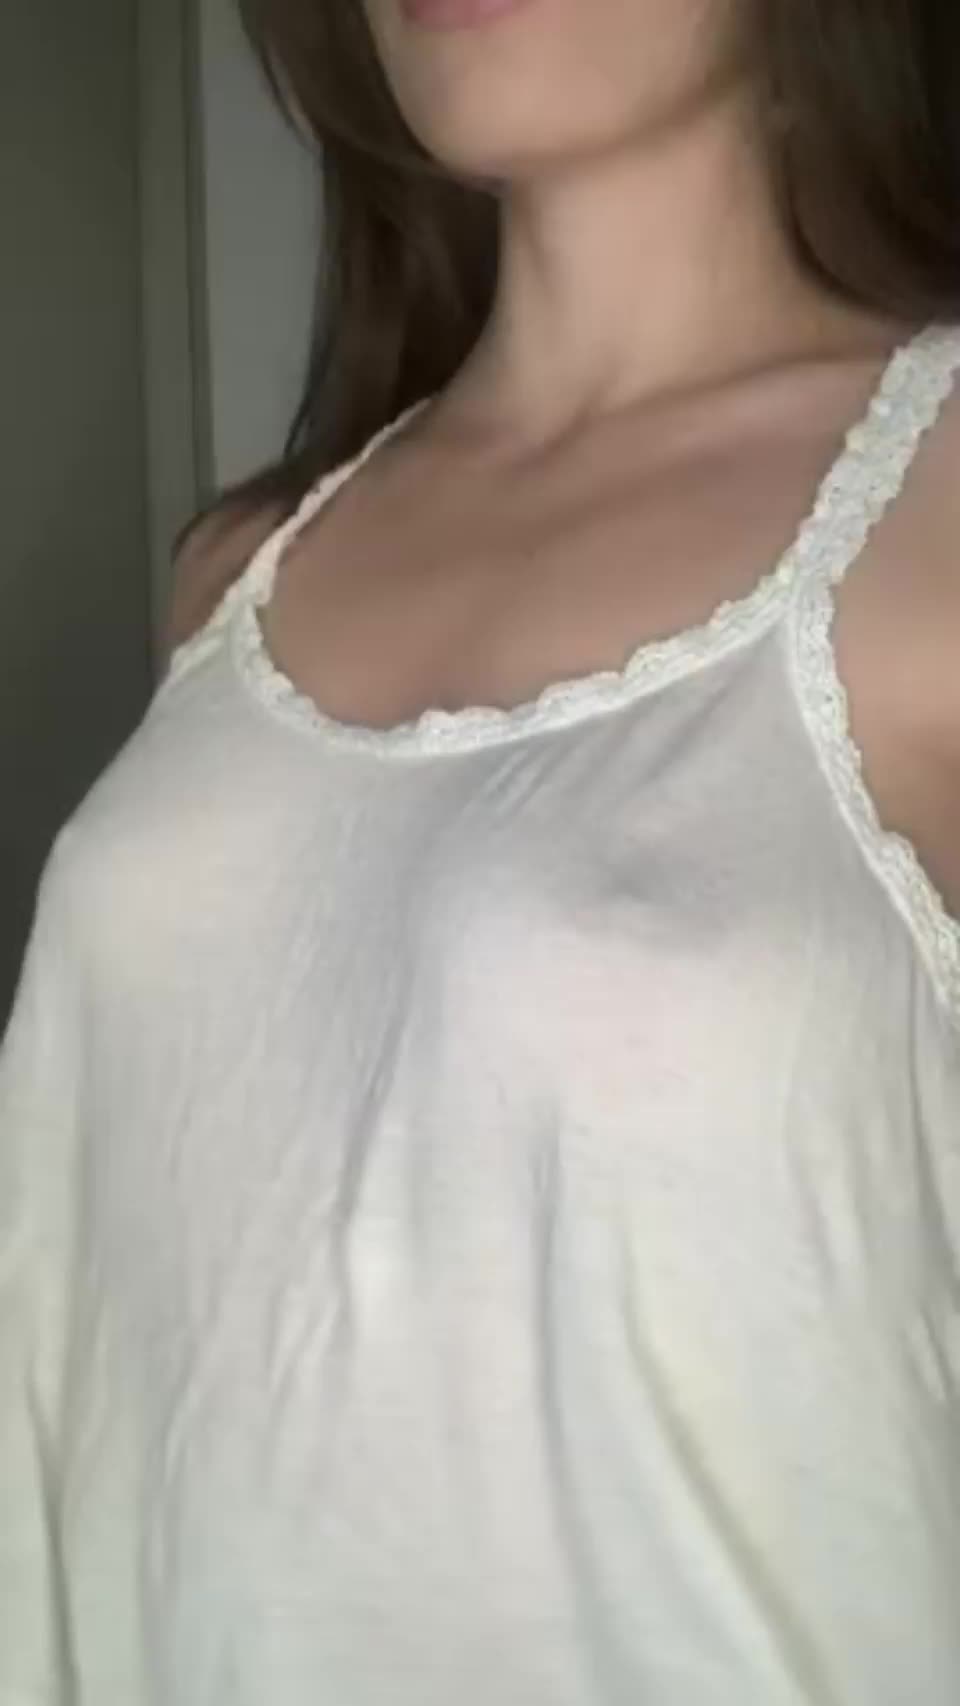 lizfermini cute morning tits reveal